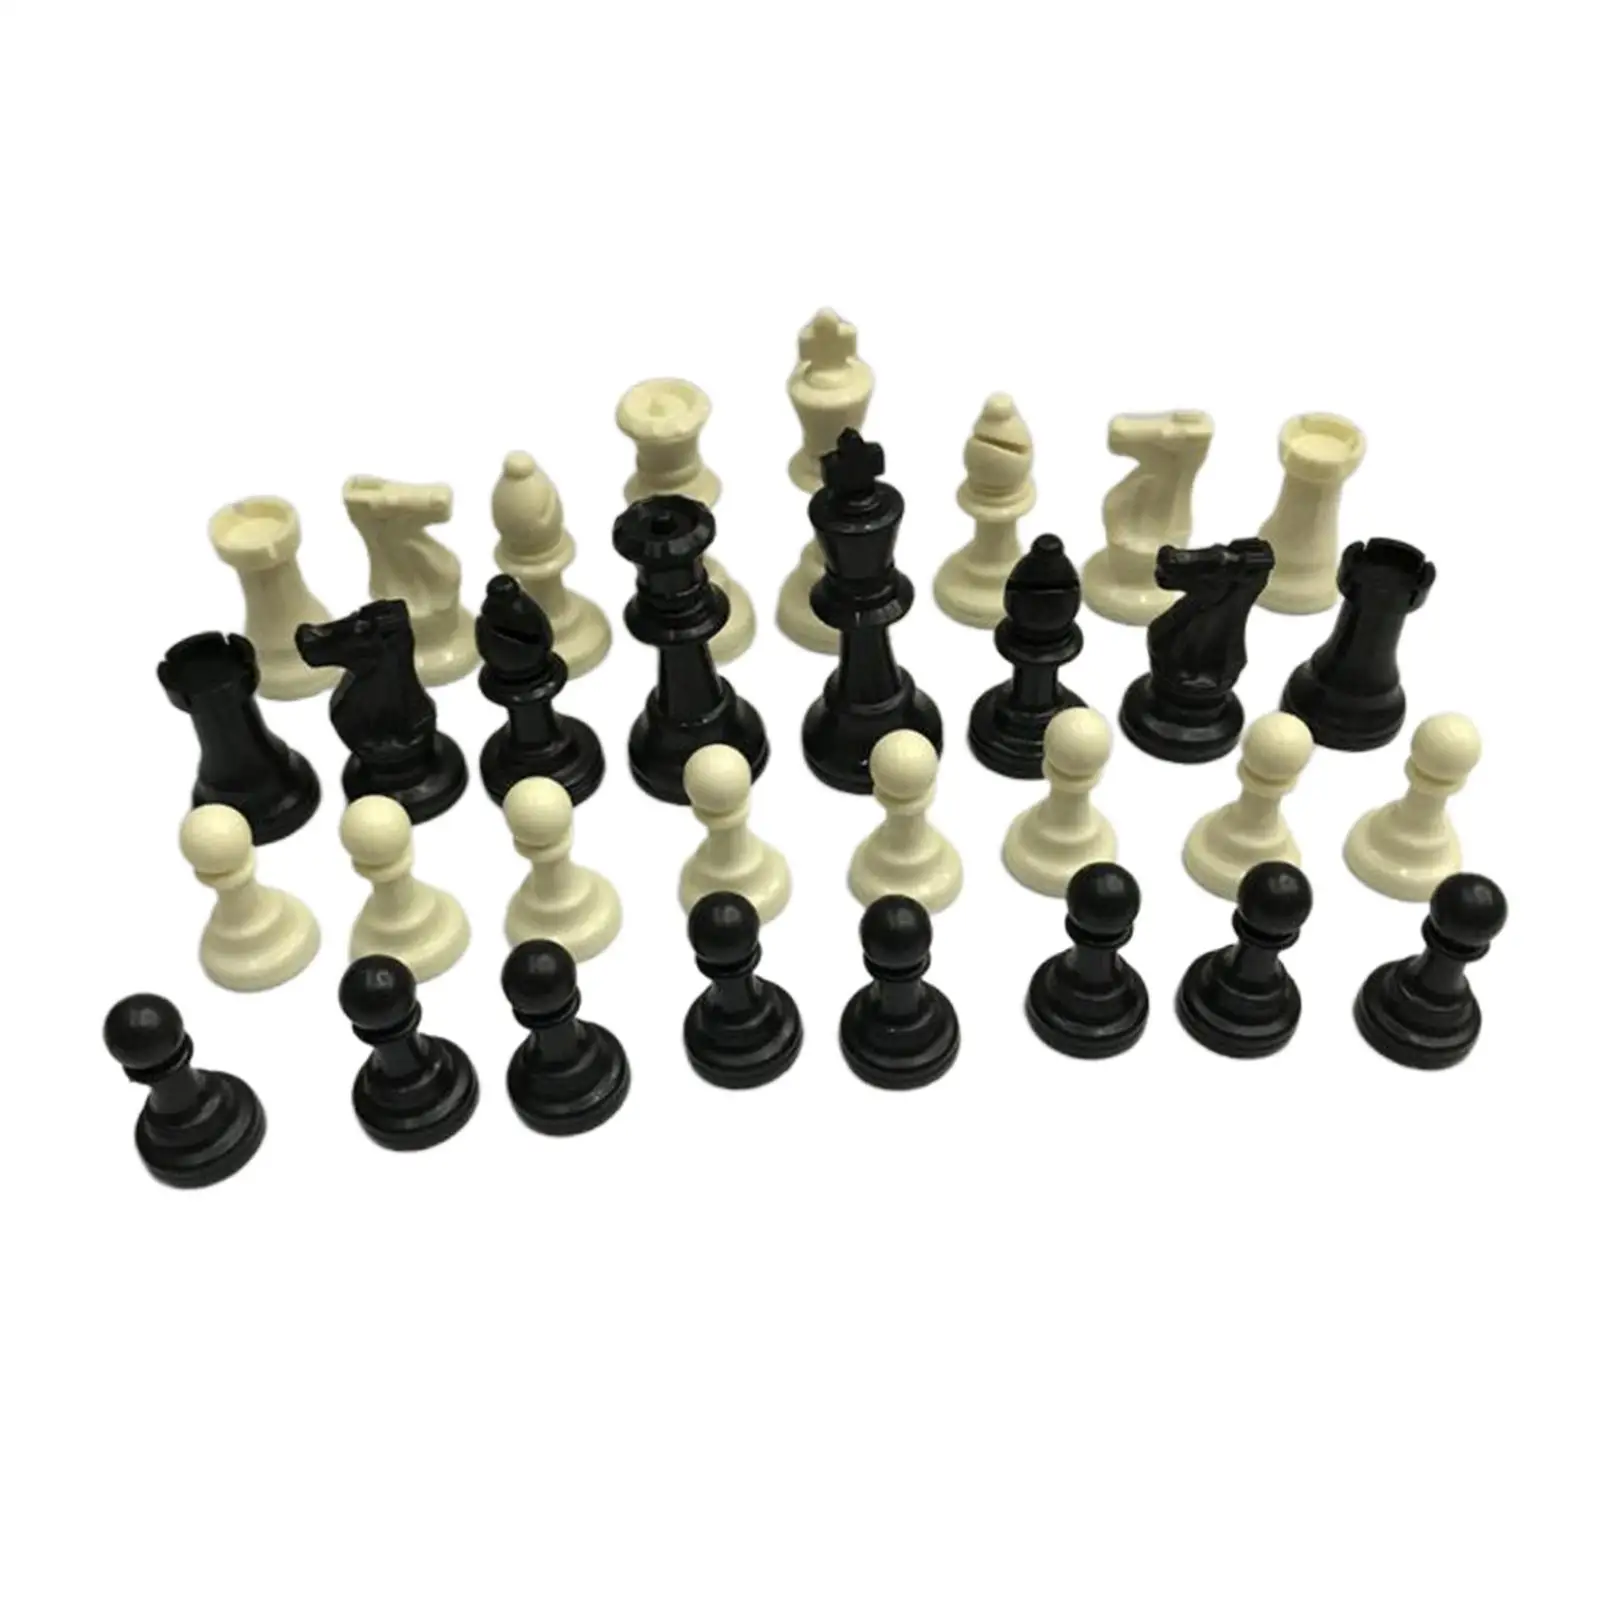 32pcs International Chess Pieces Set Tournament Checkers 75mm King